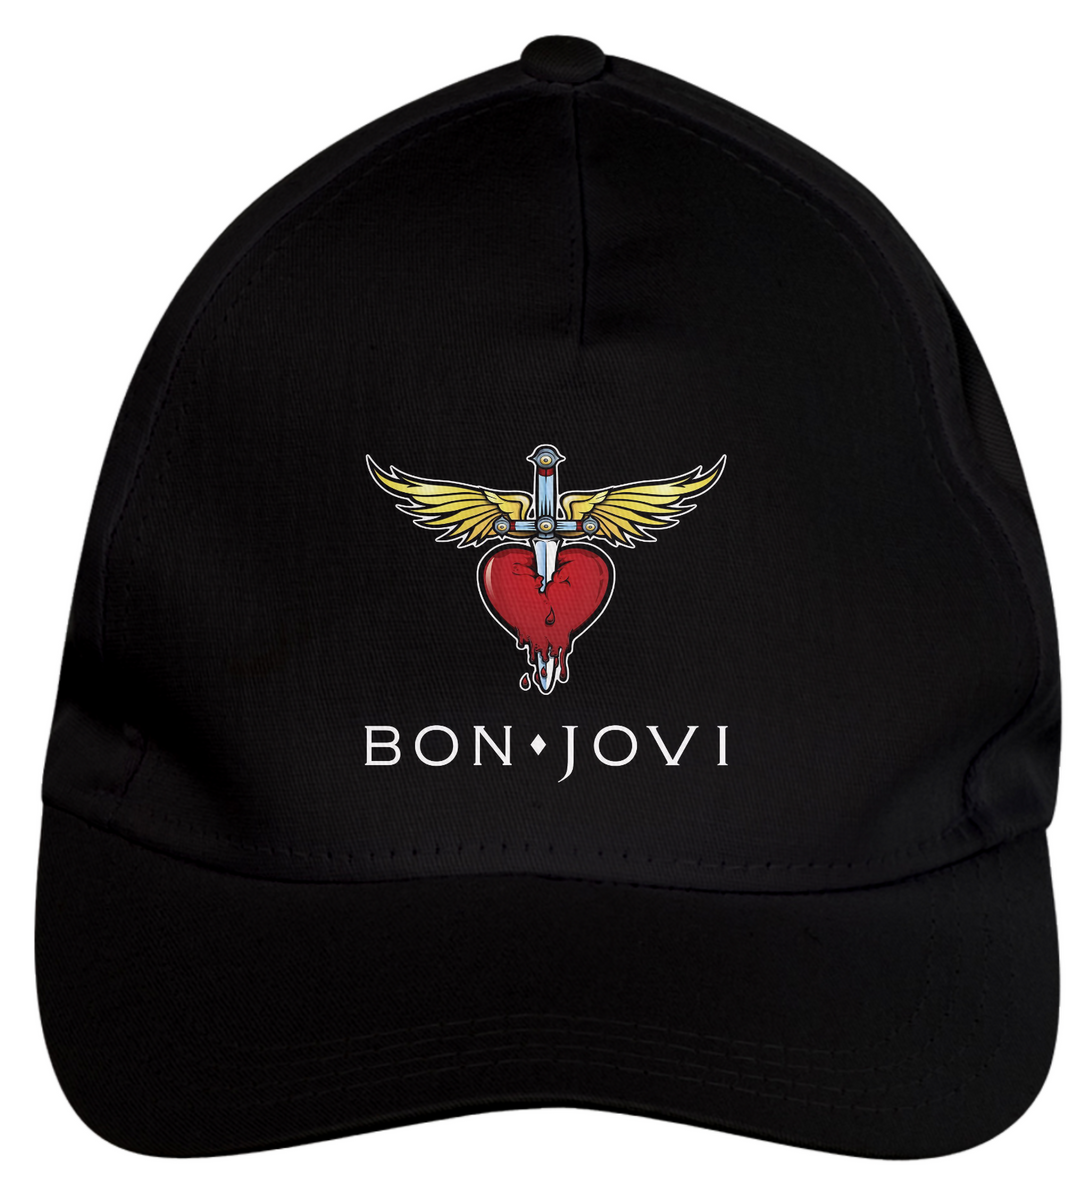 Nome do produto: Bon Jovi